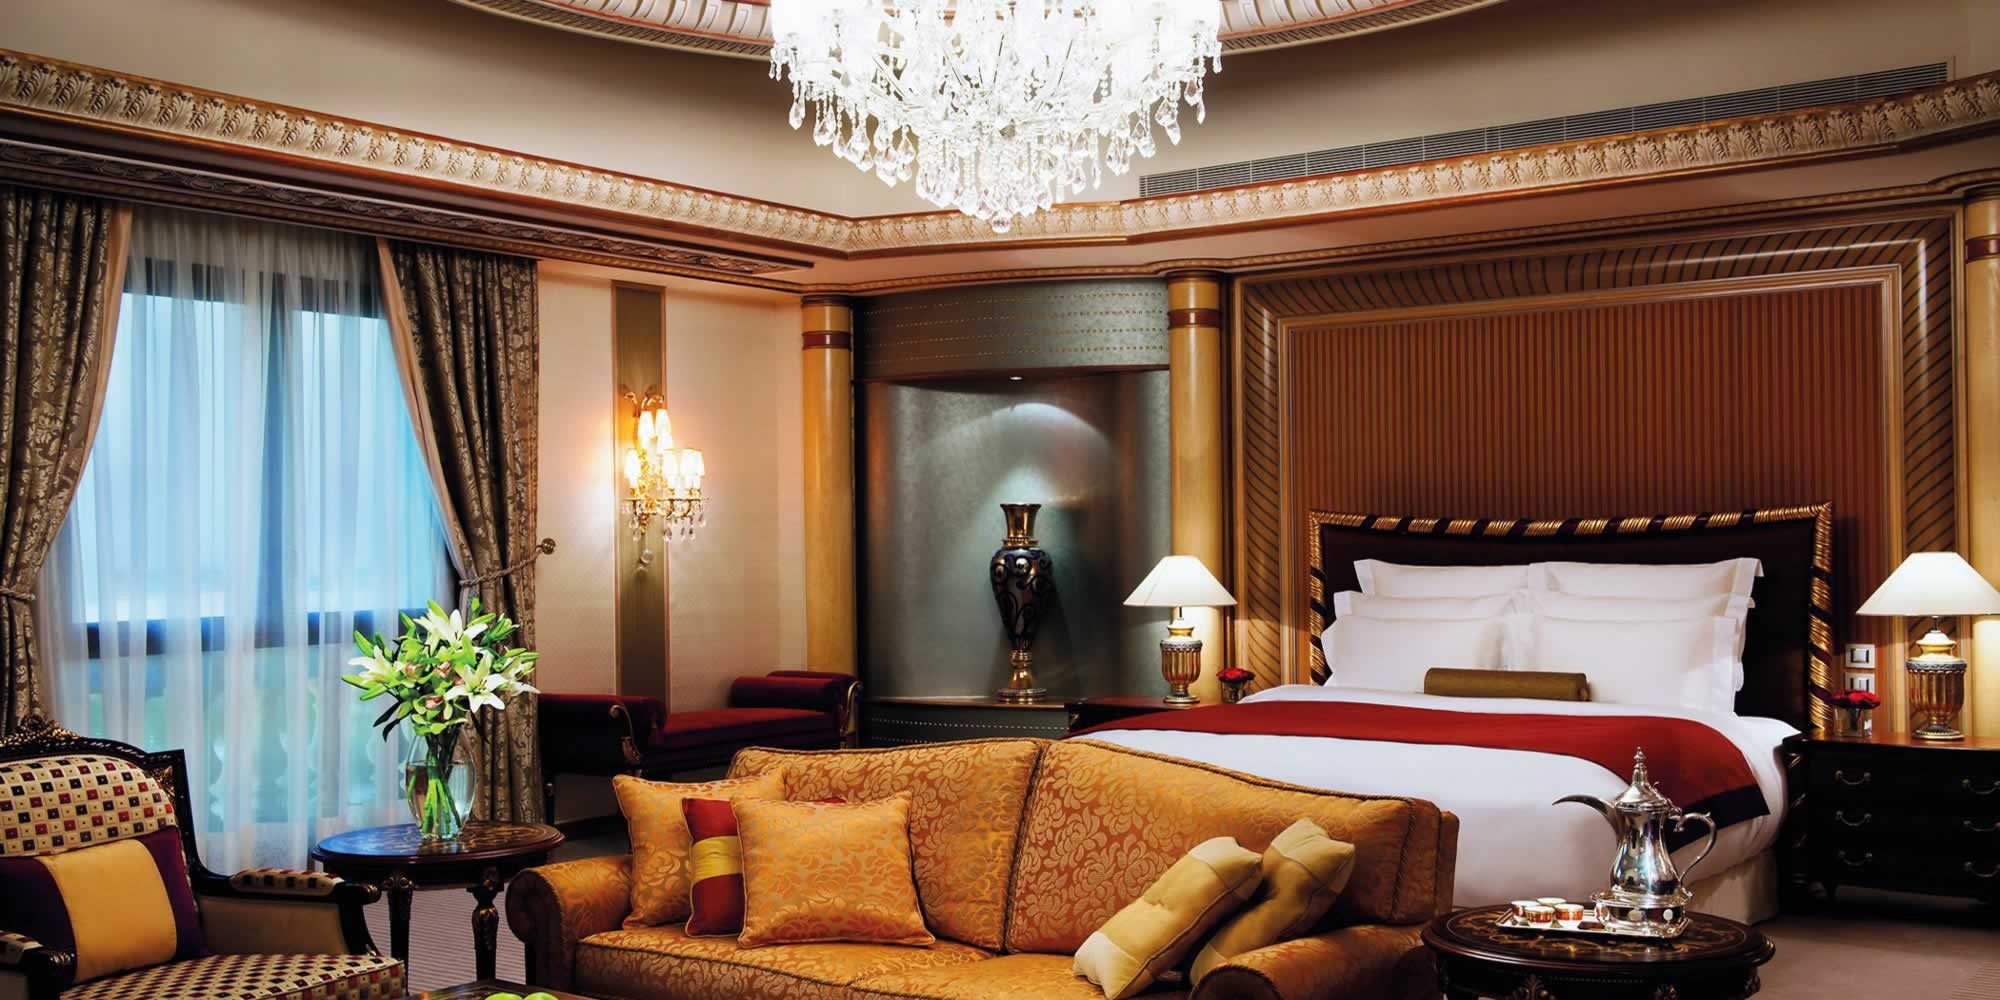 <p>The Ritz Carlton Hotel</p>